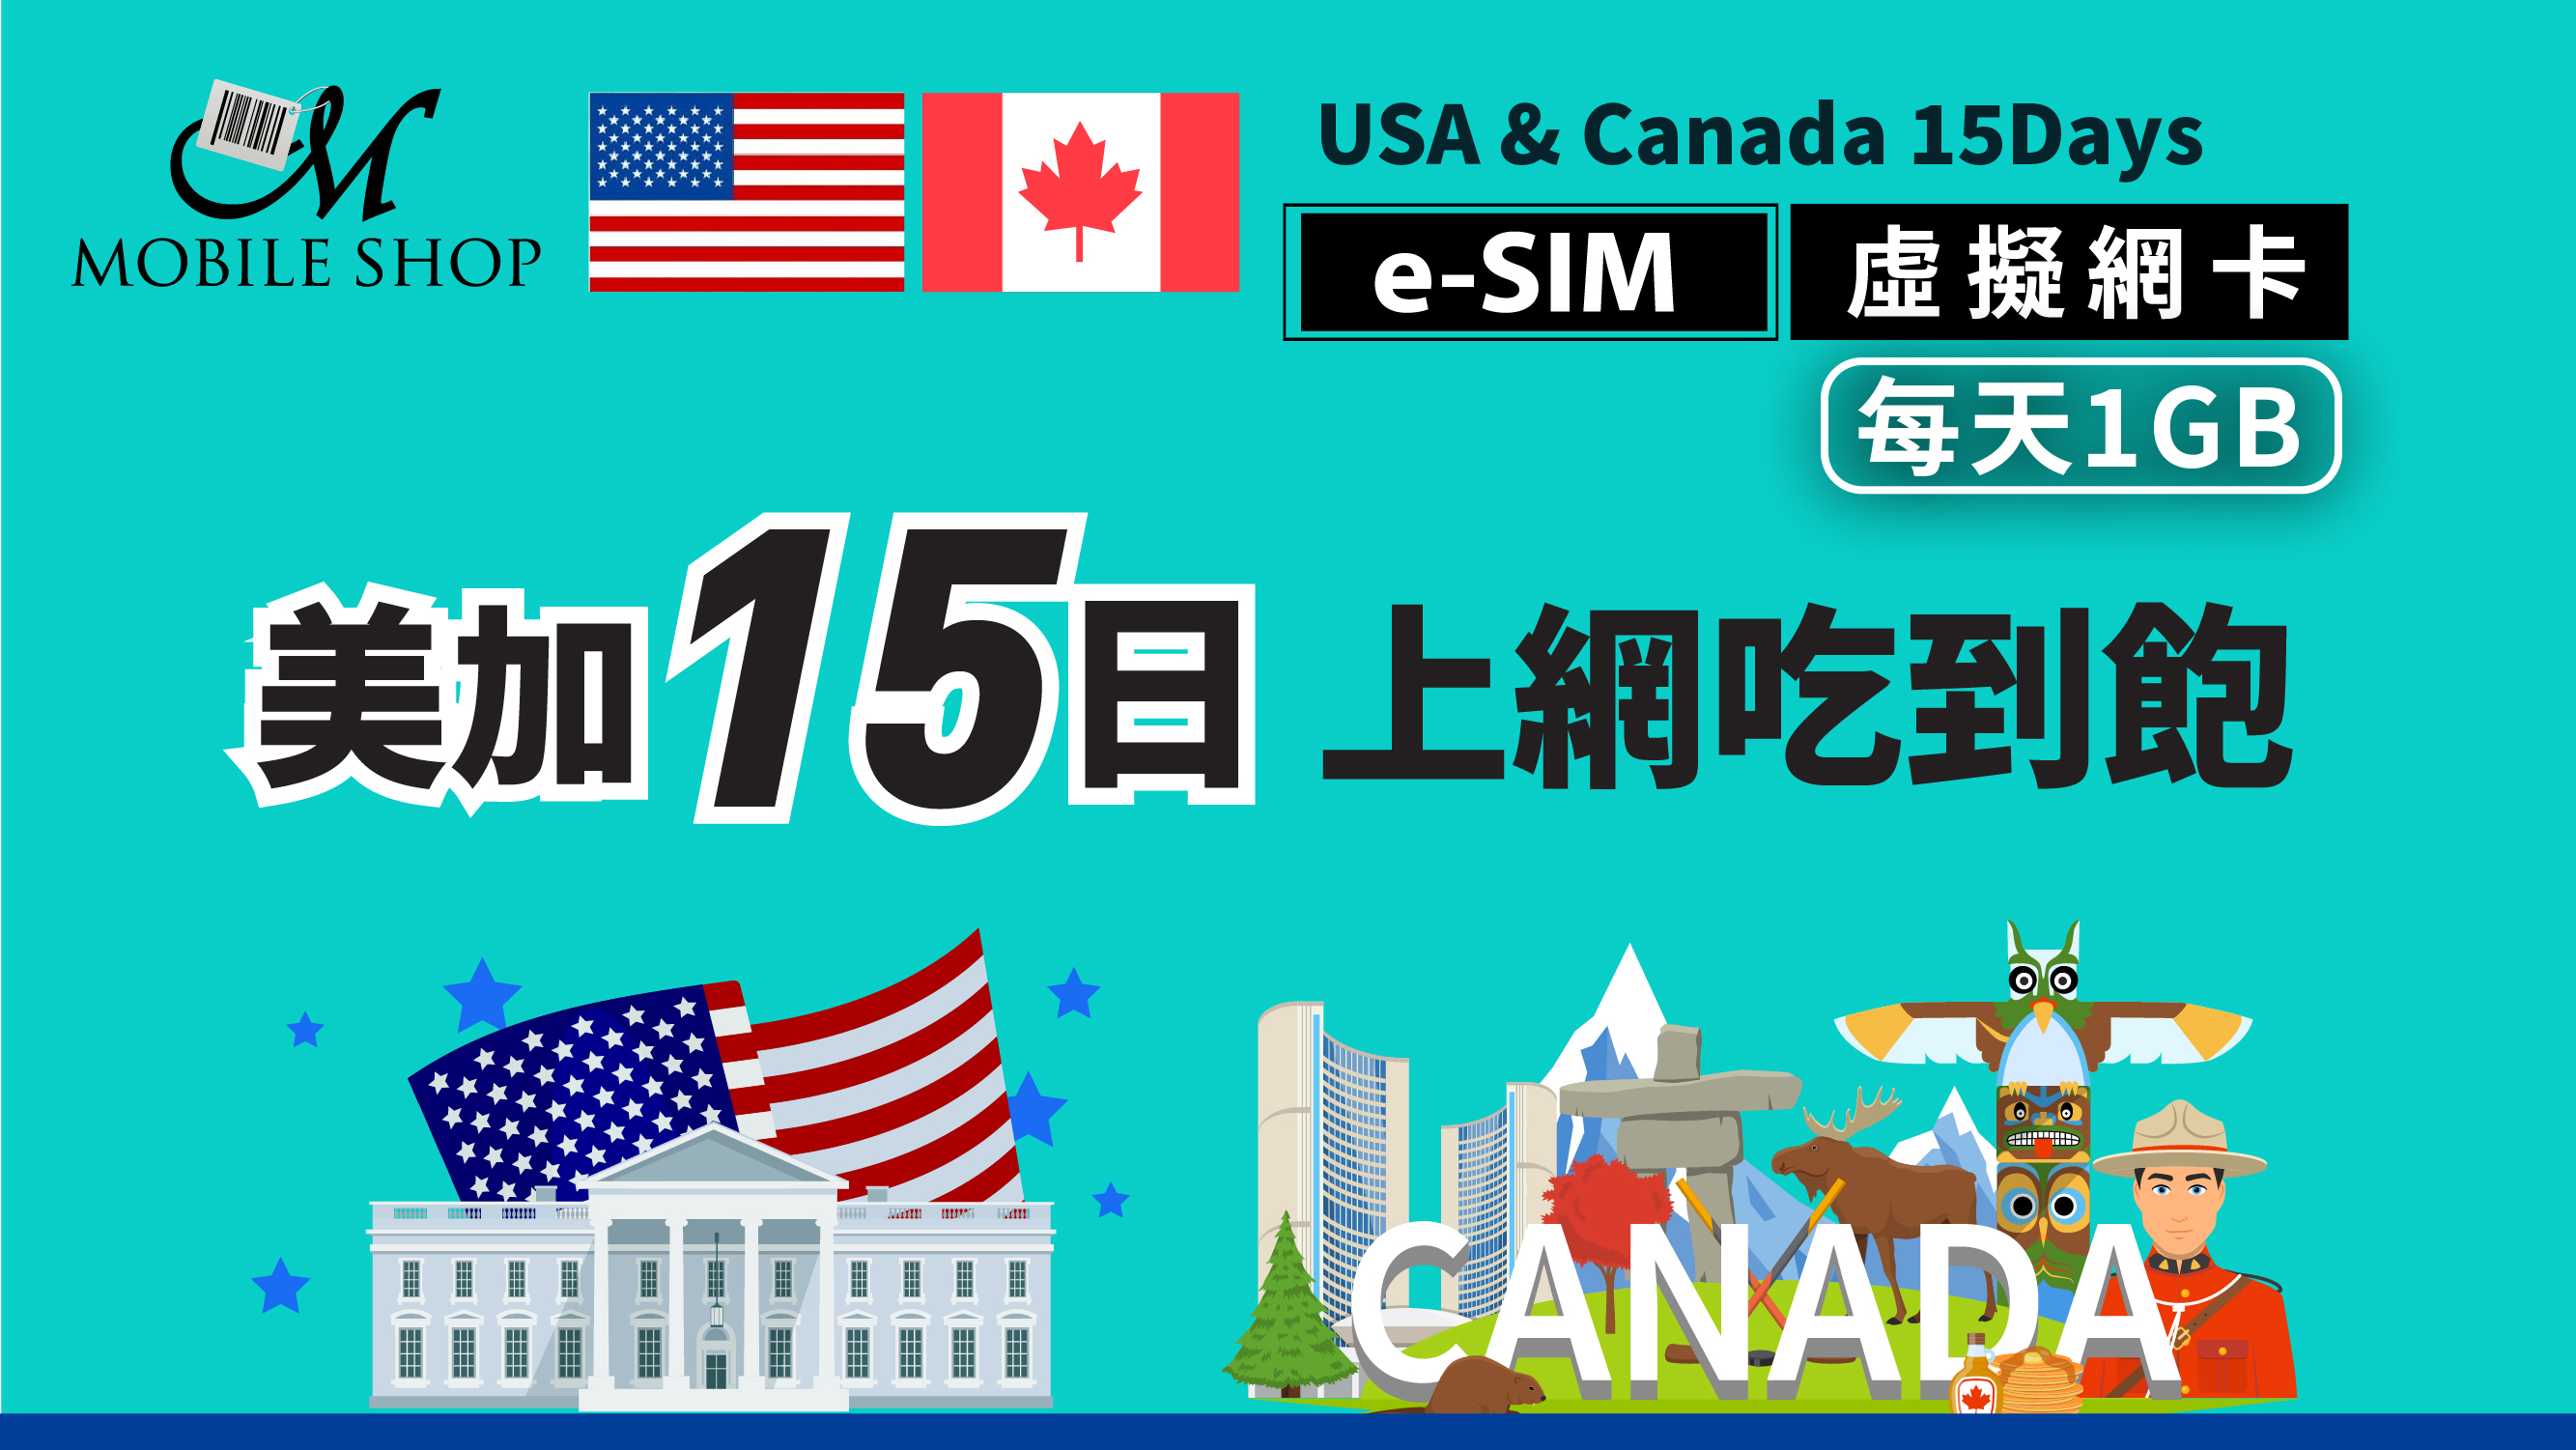 e-SIM_USA&Canada 15Days/1GB day unlimited data 